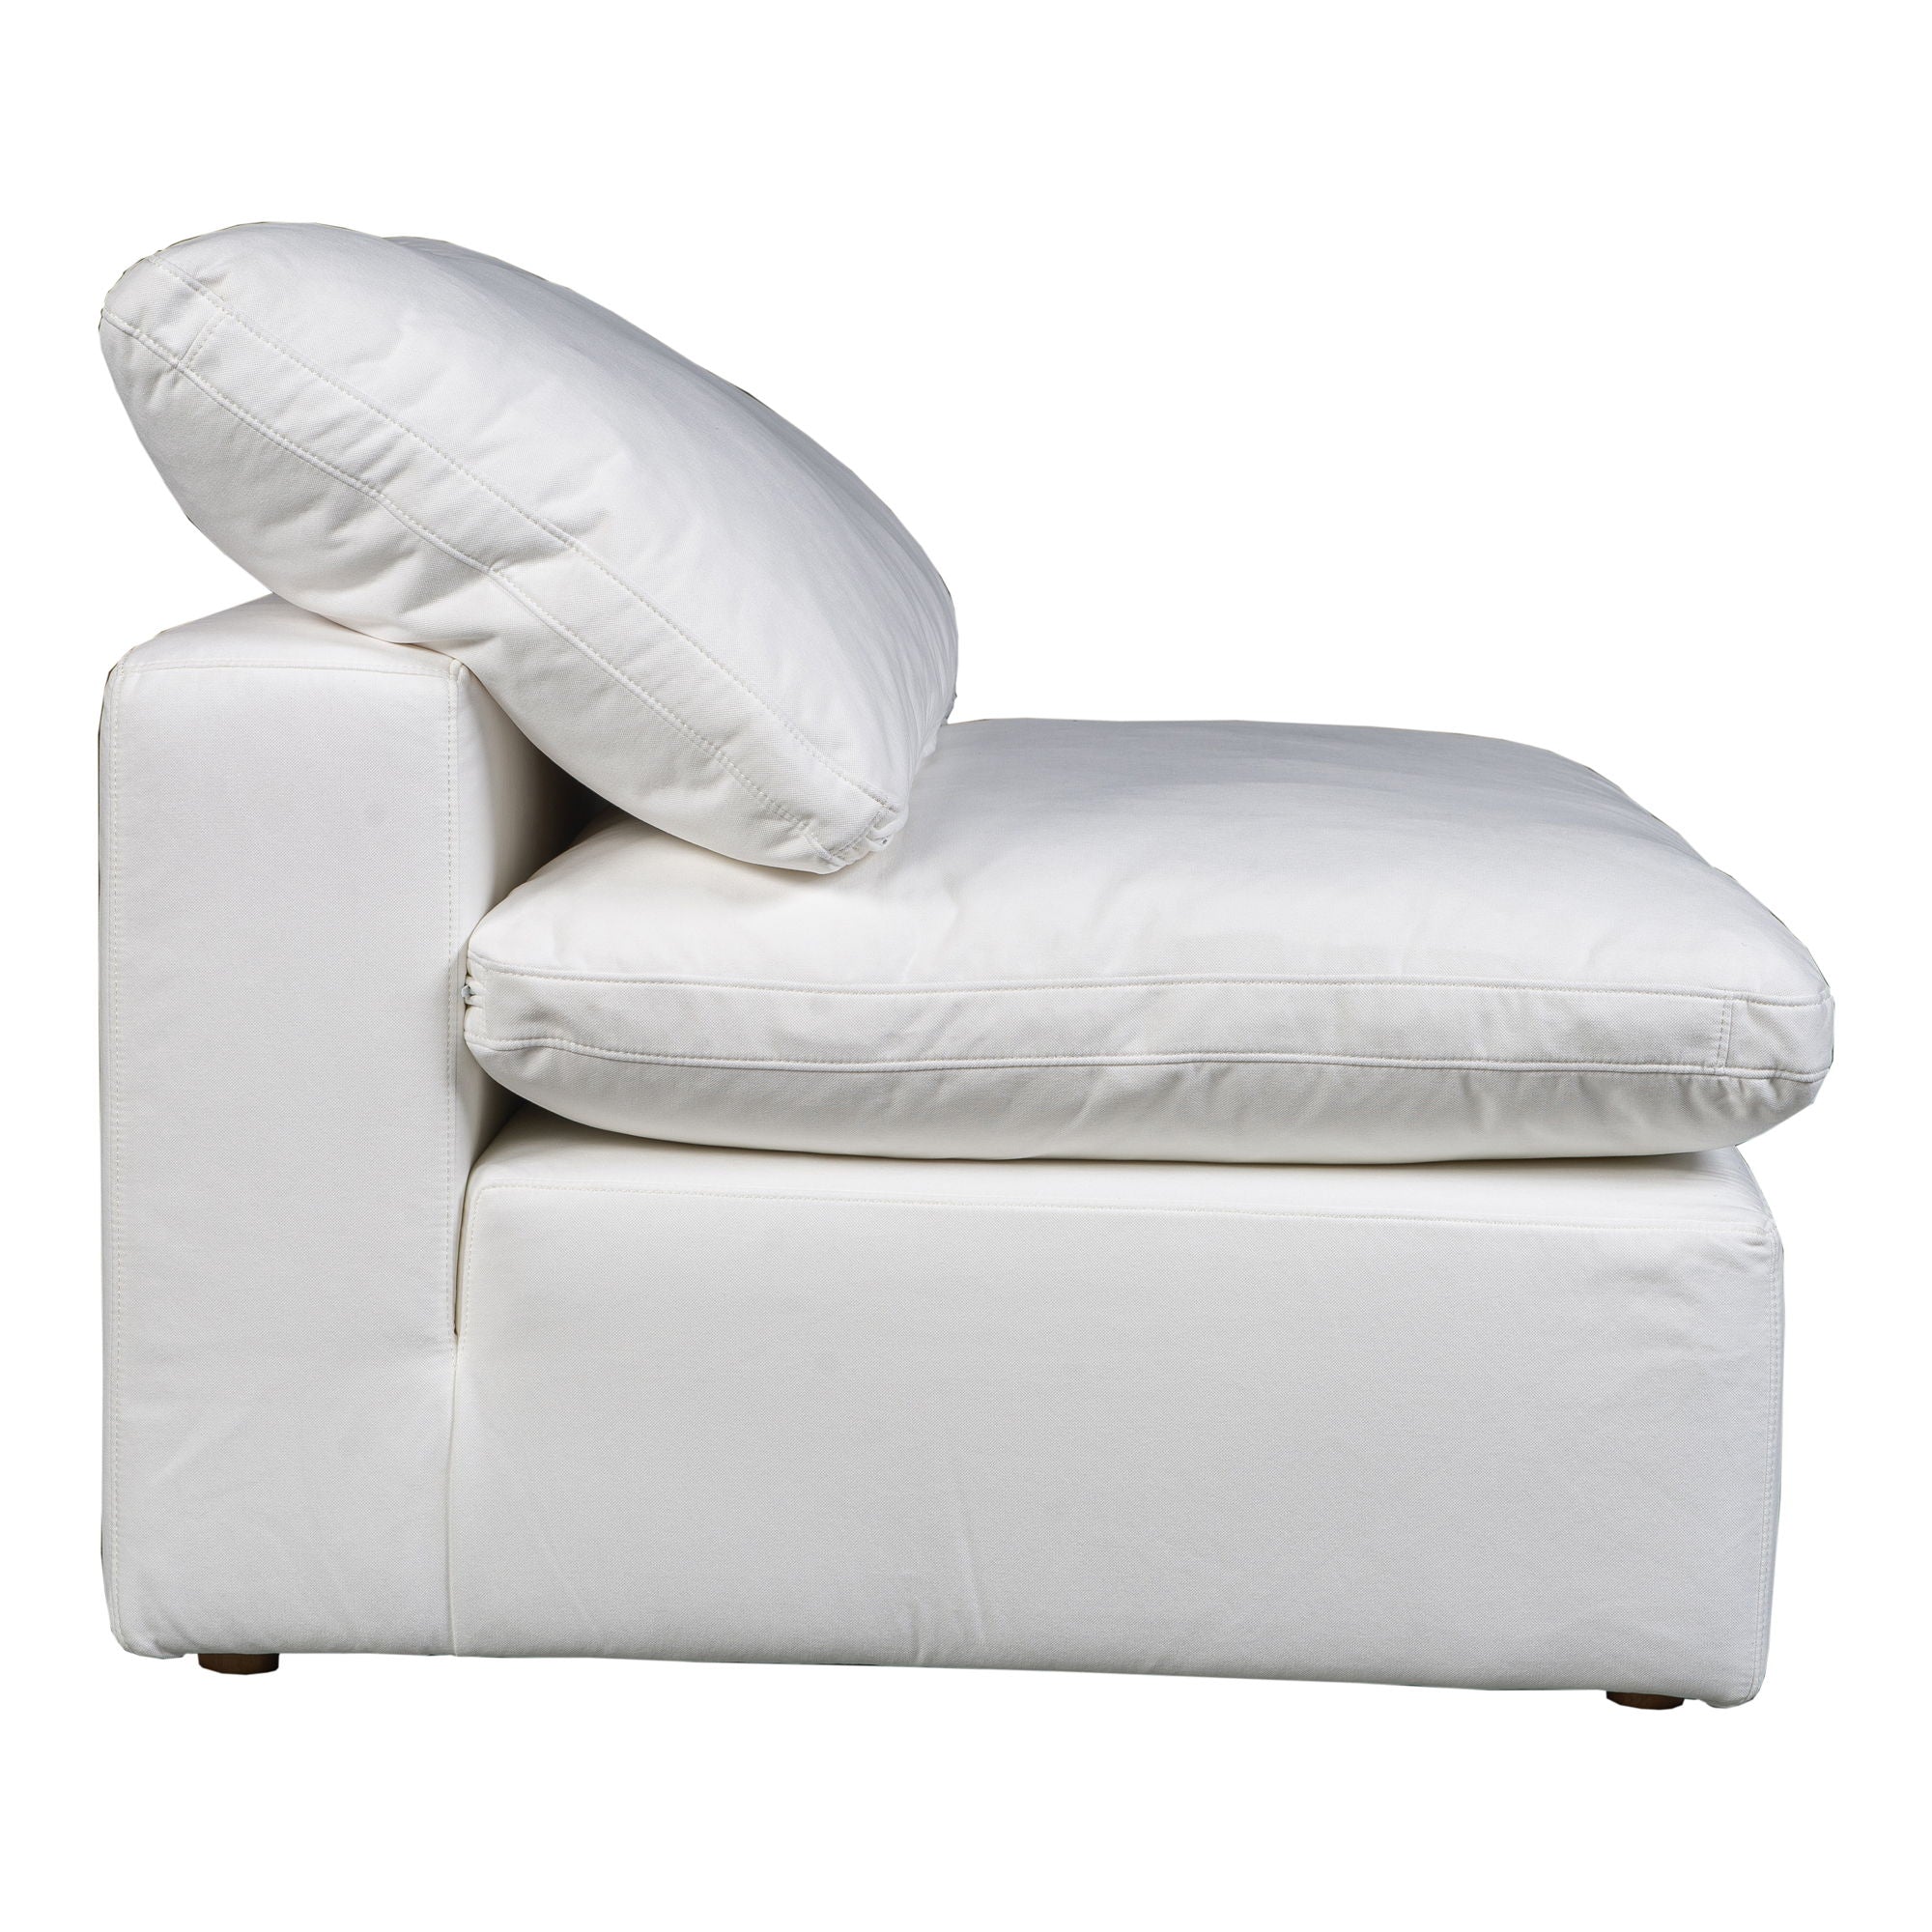 Terra - Condo Slipper Chair Livesmart Fabric - Cream